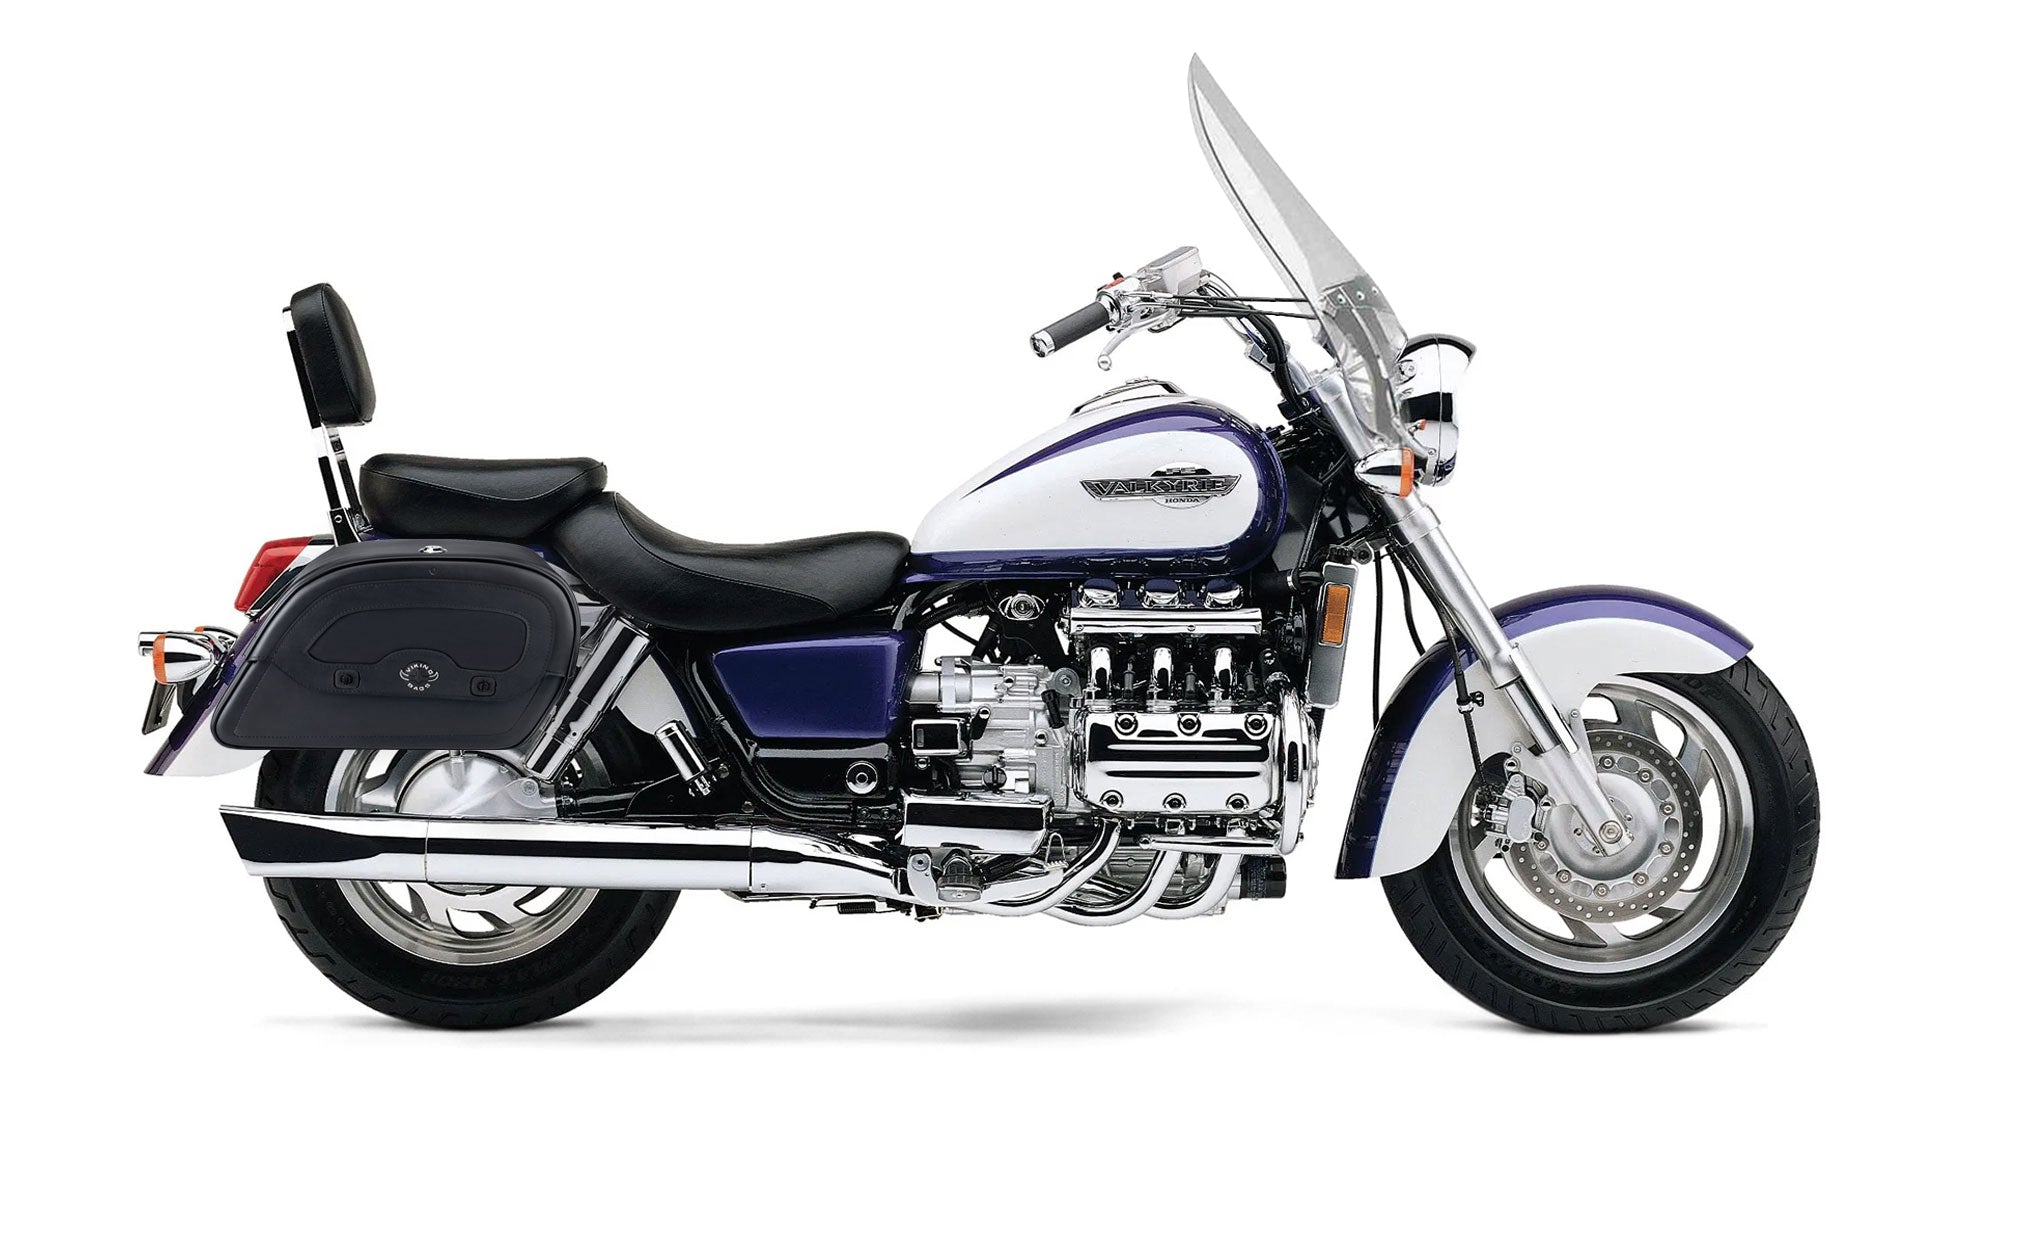 Viking Warrior Large Honda Valkyrie Tourer Shock Cut Out Leather Motorcycle Saddlebags on Bike Photo @expand